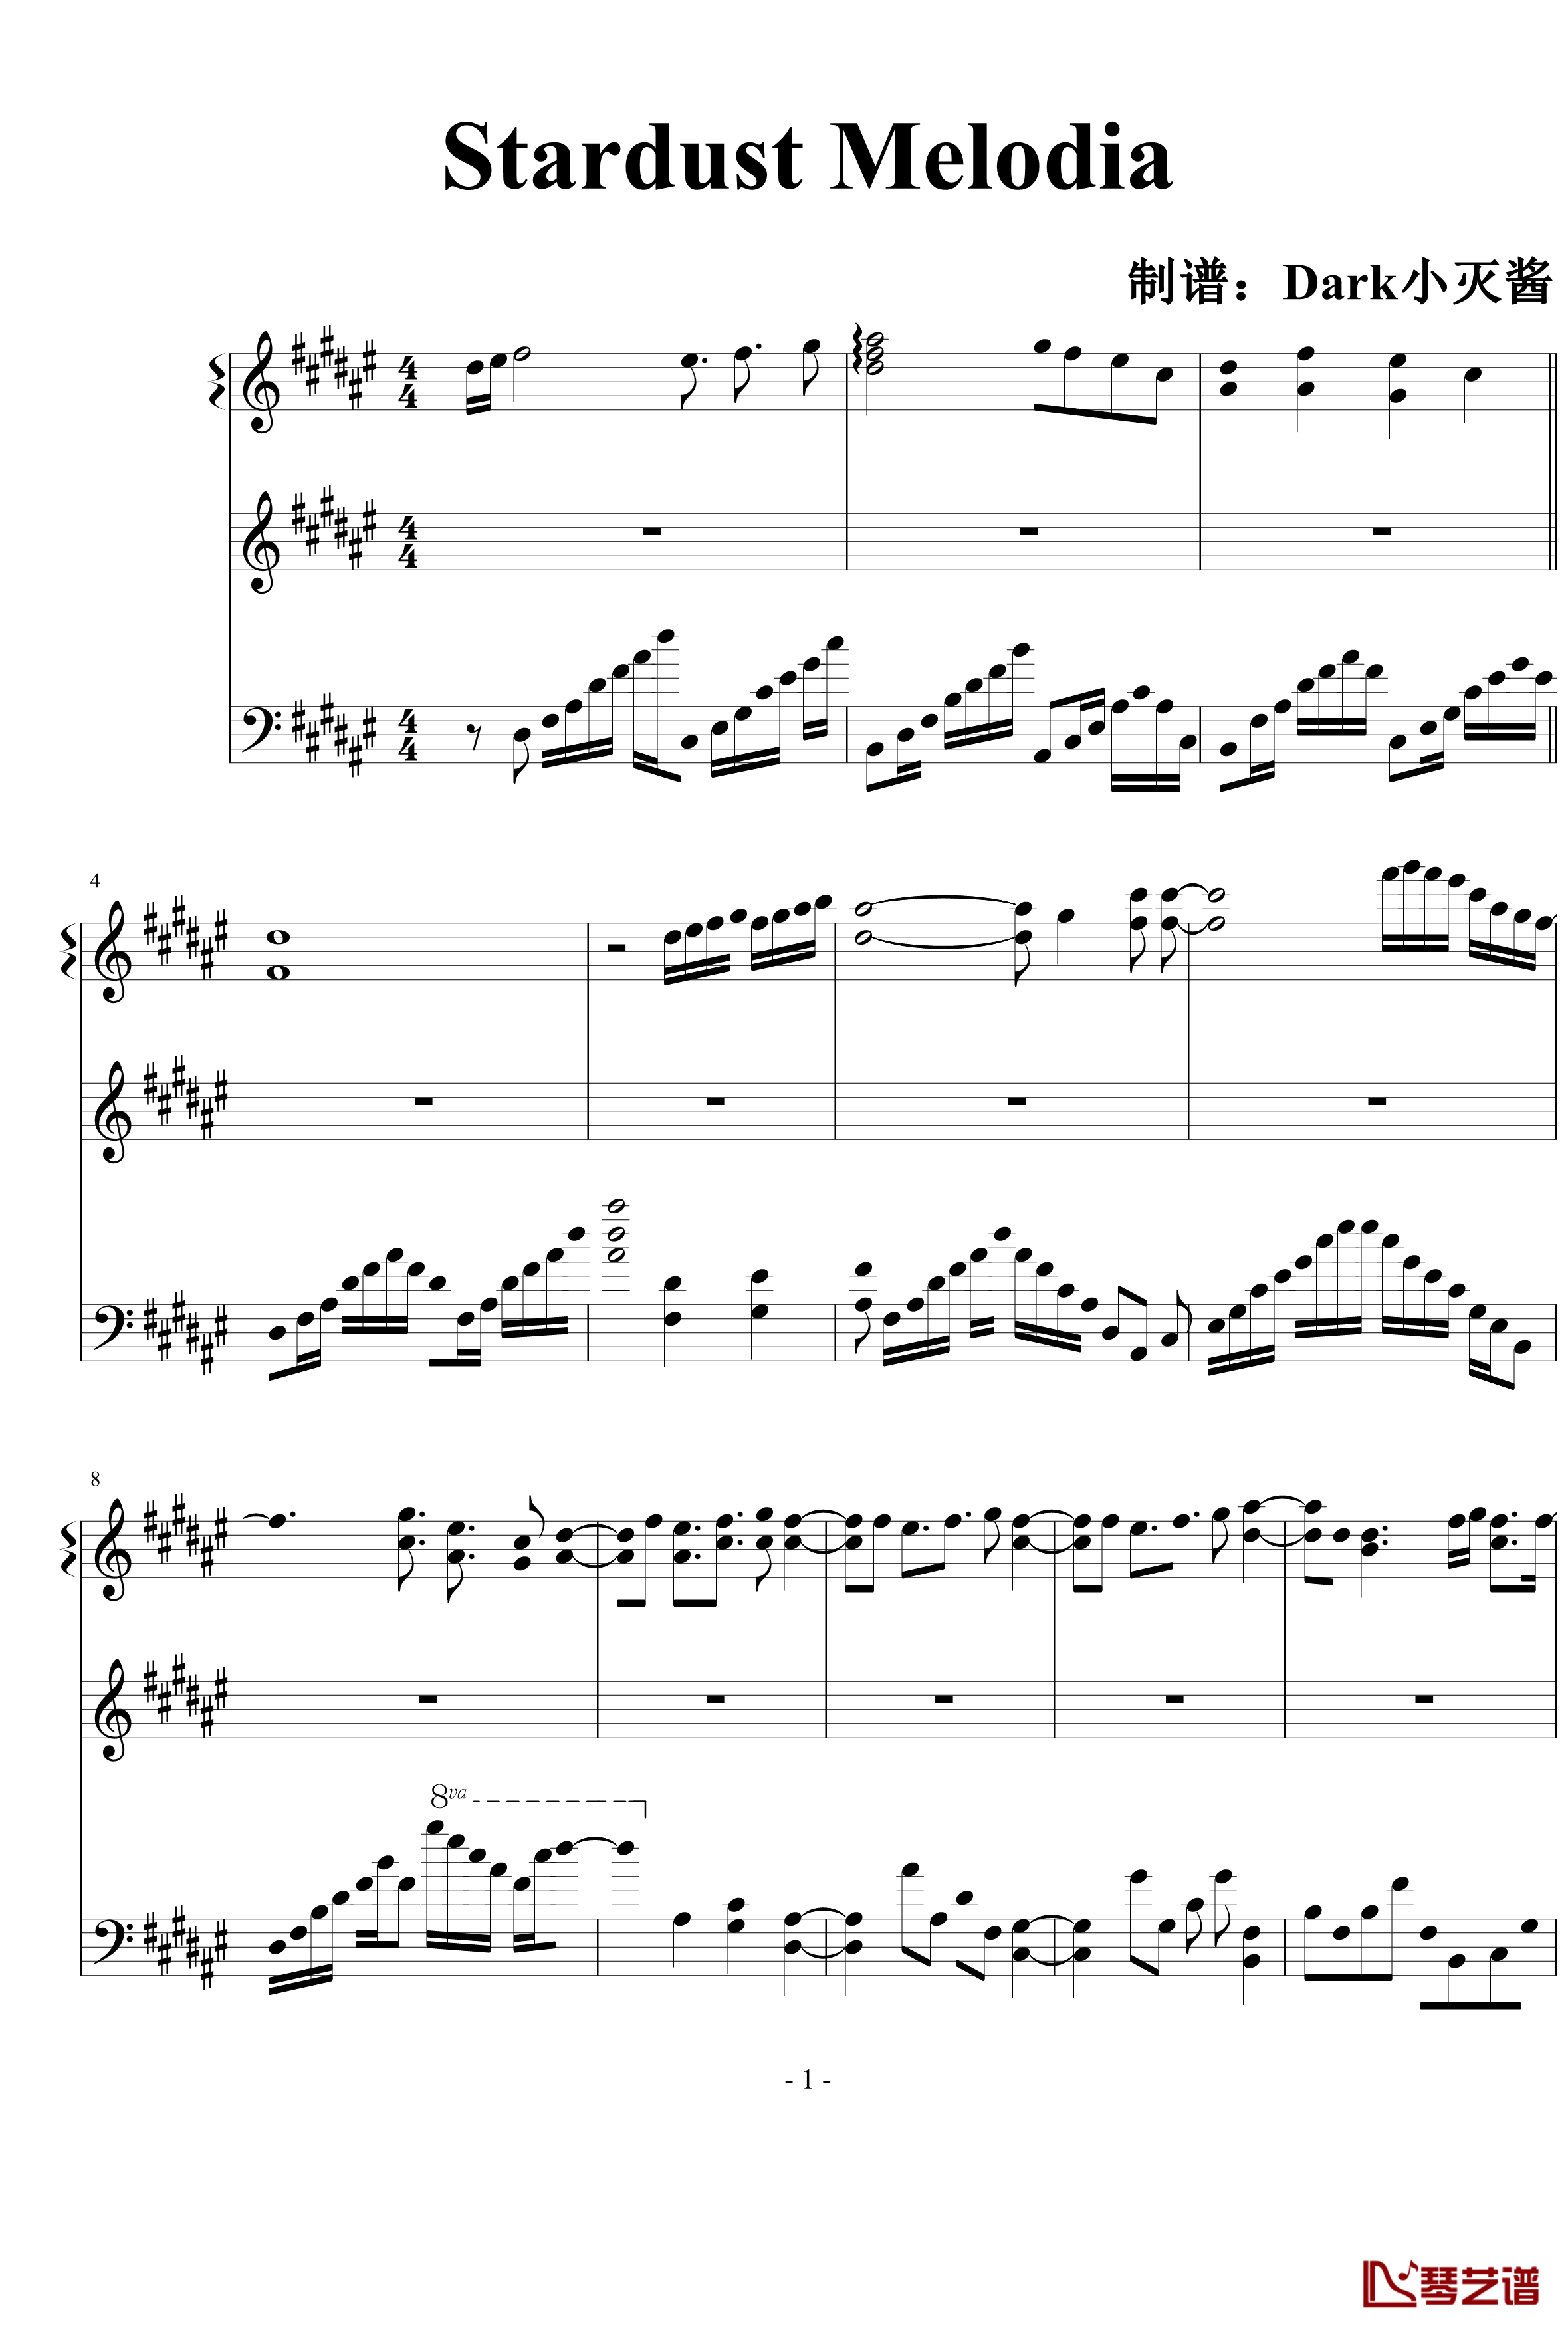 Stardust Melodia钢琴谱-境界线上的地平线-Ceui1